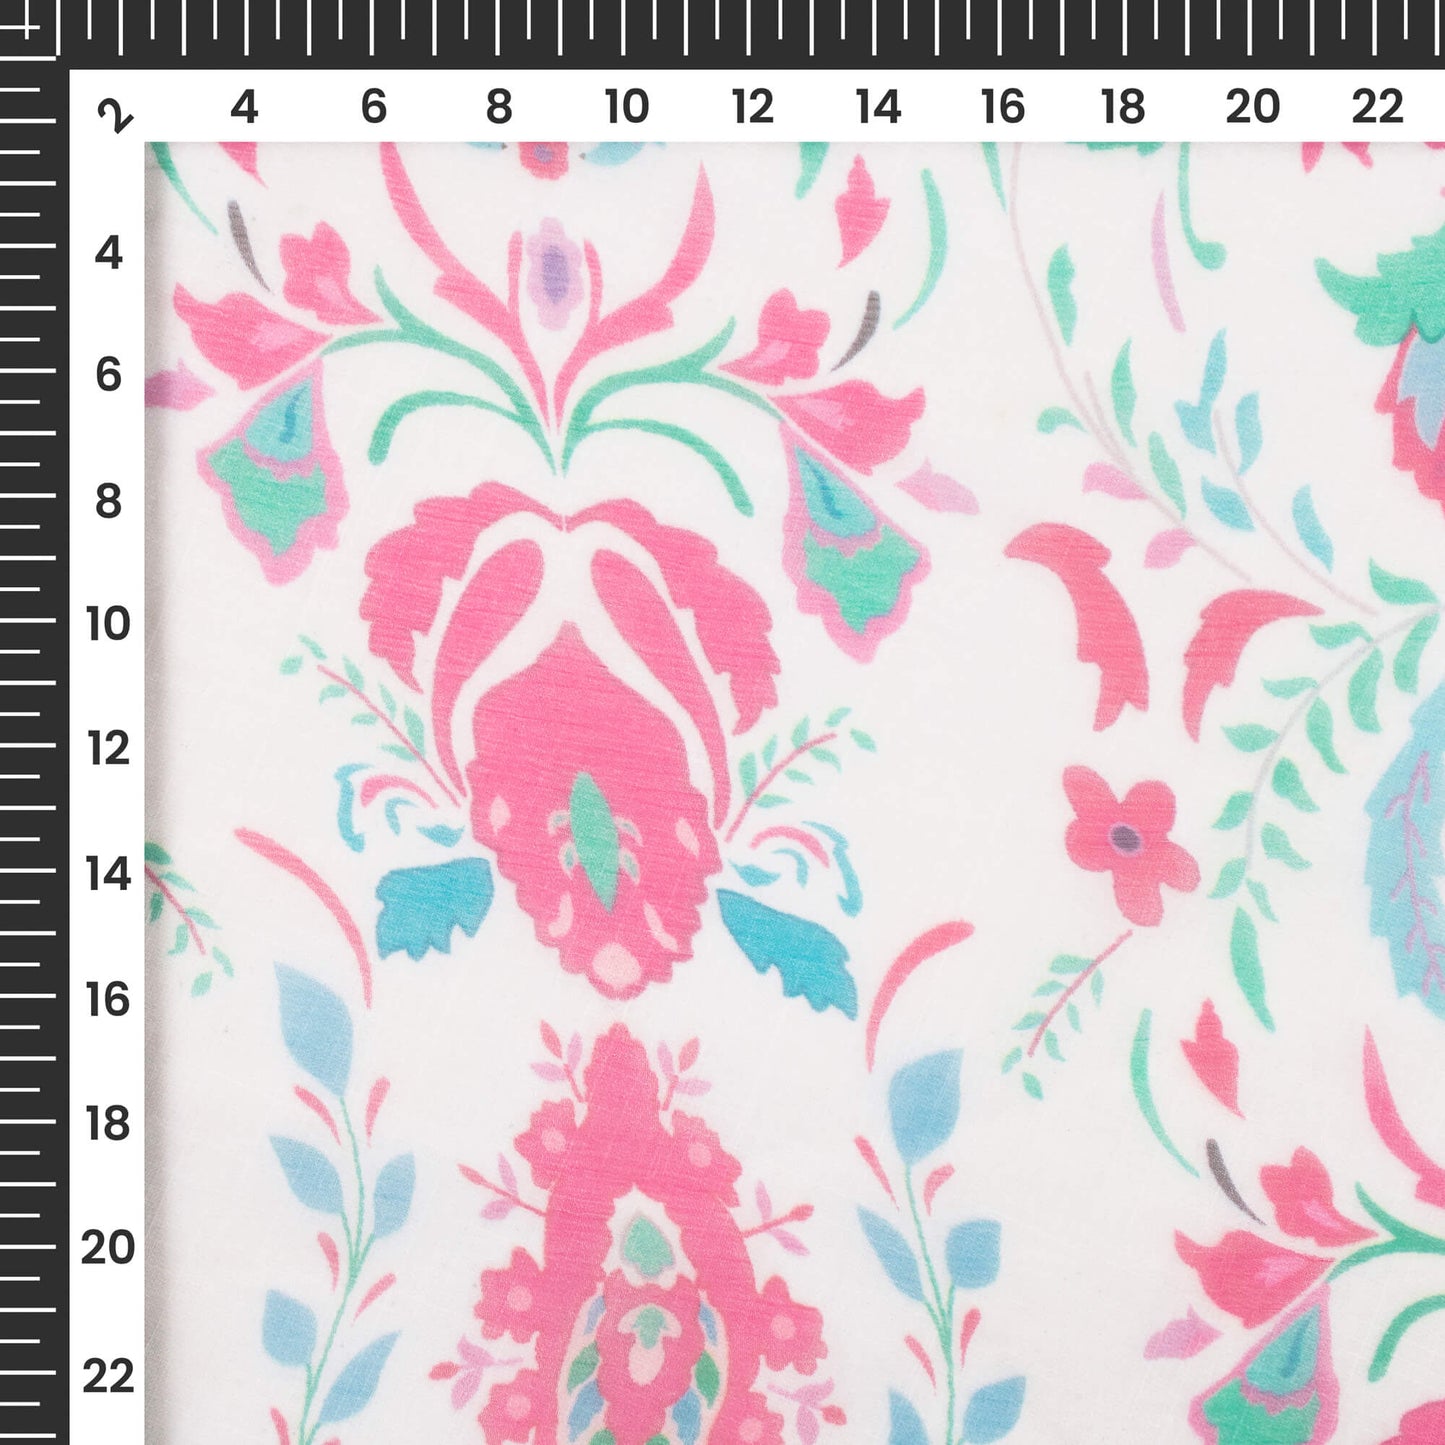 Exclusive Vintage Floral Digital Print Bemberg Chiffon Fabric